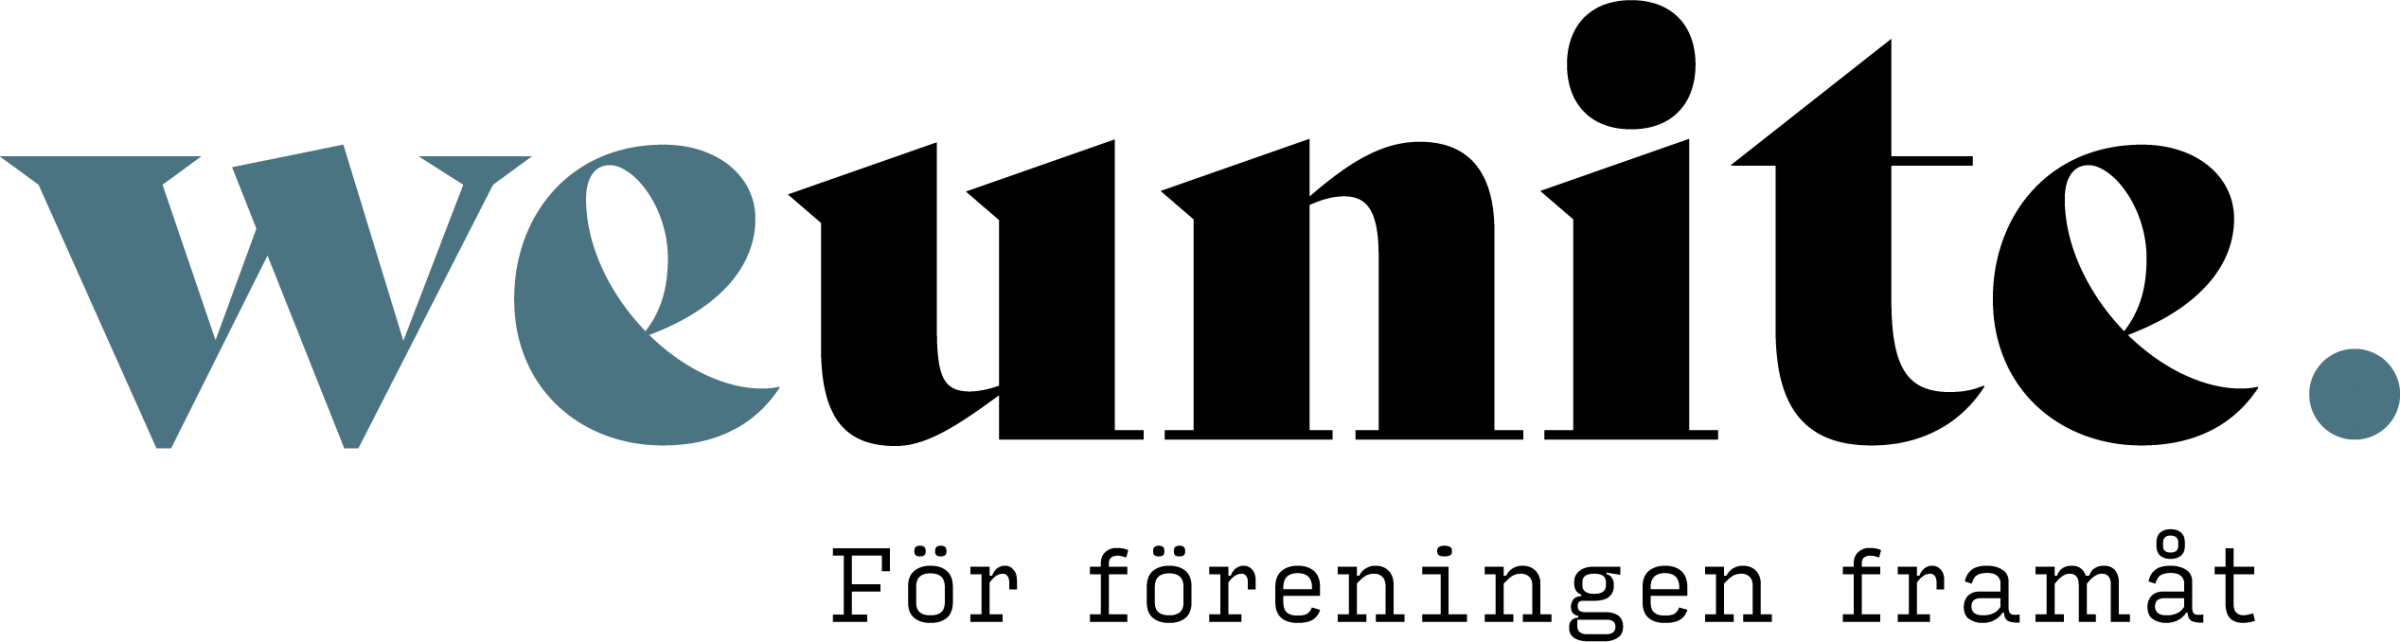 WeUnite Segling-logotype